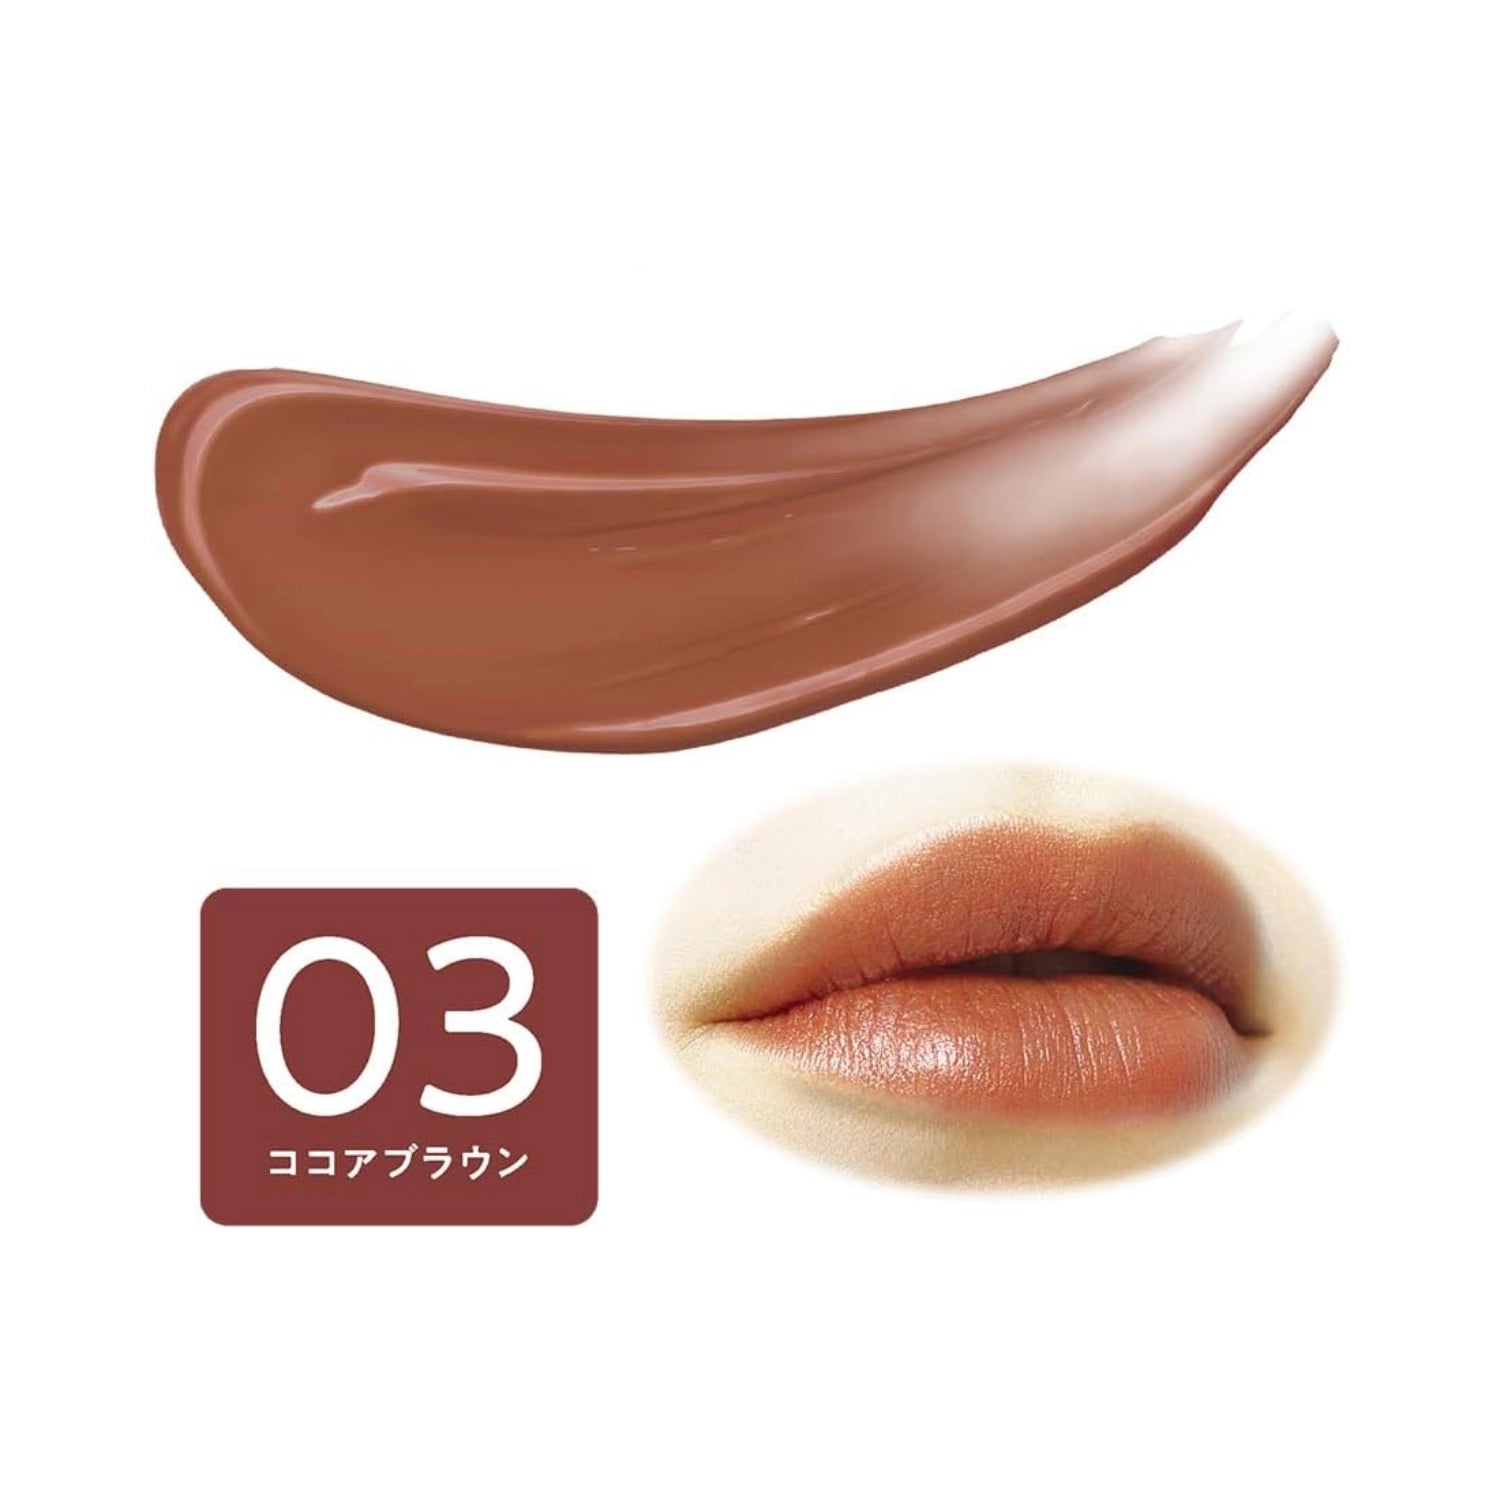 03 Cocoa Brown